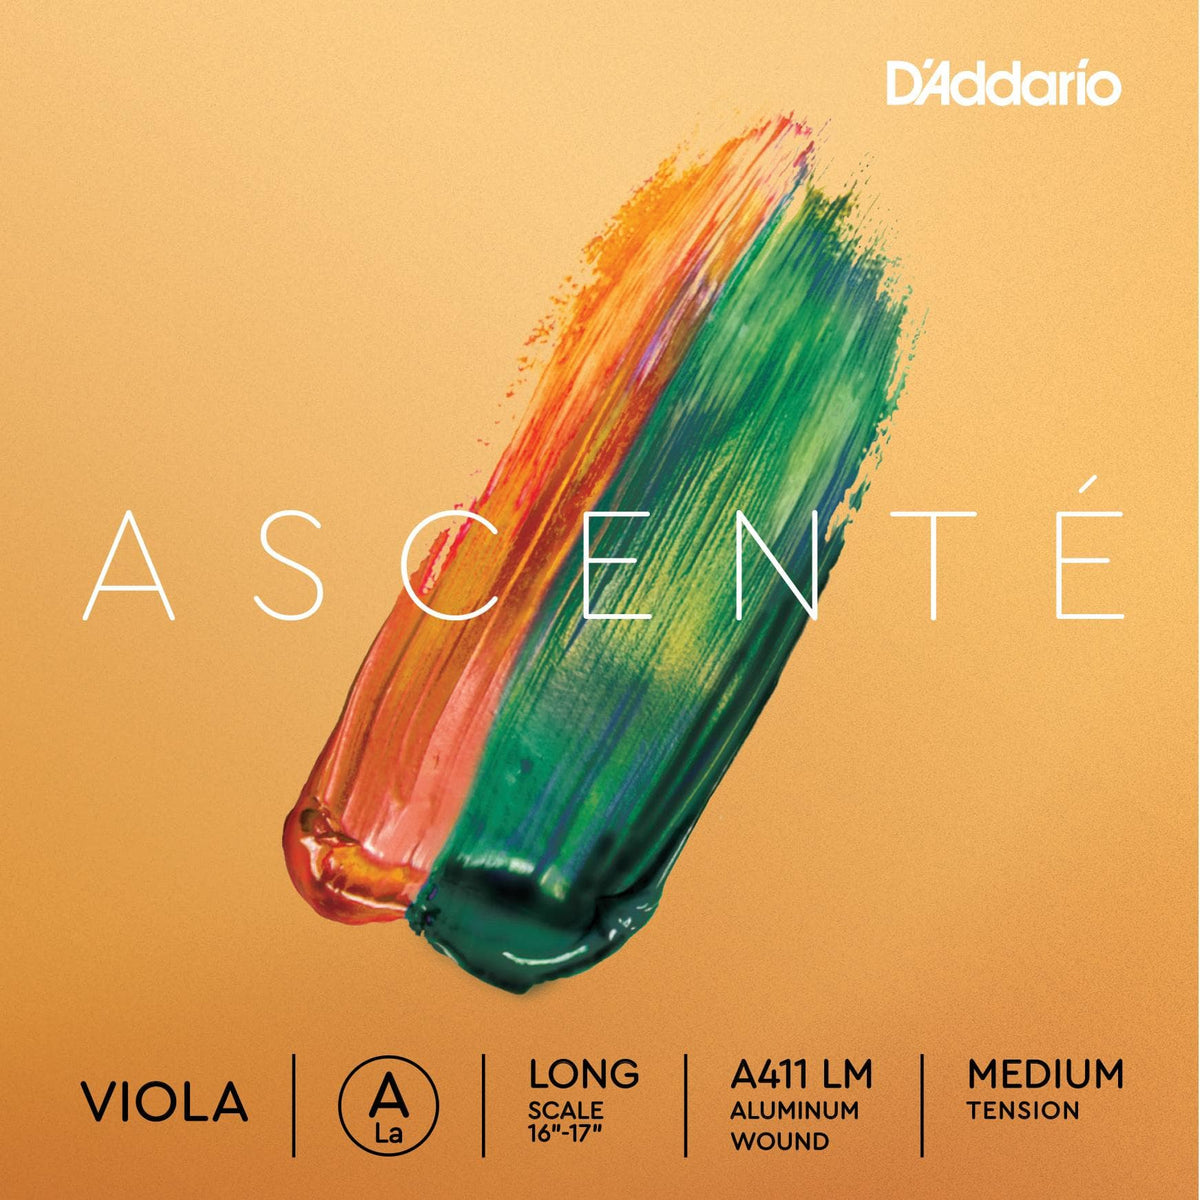 DAddario Ascente Viola A String